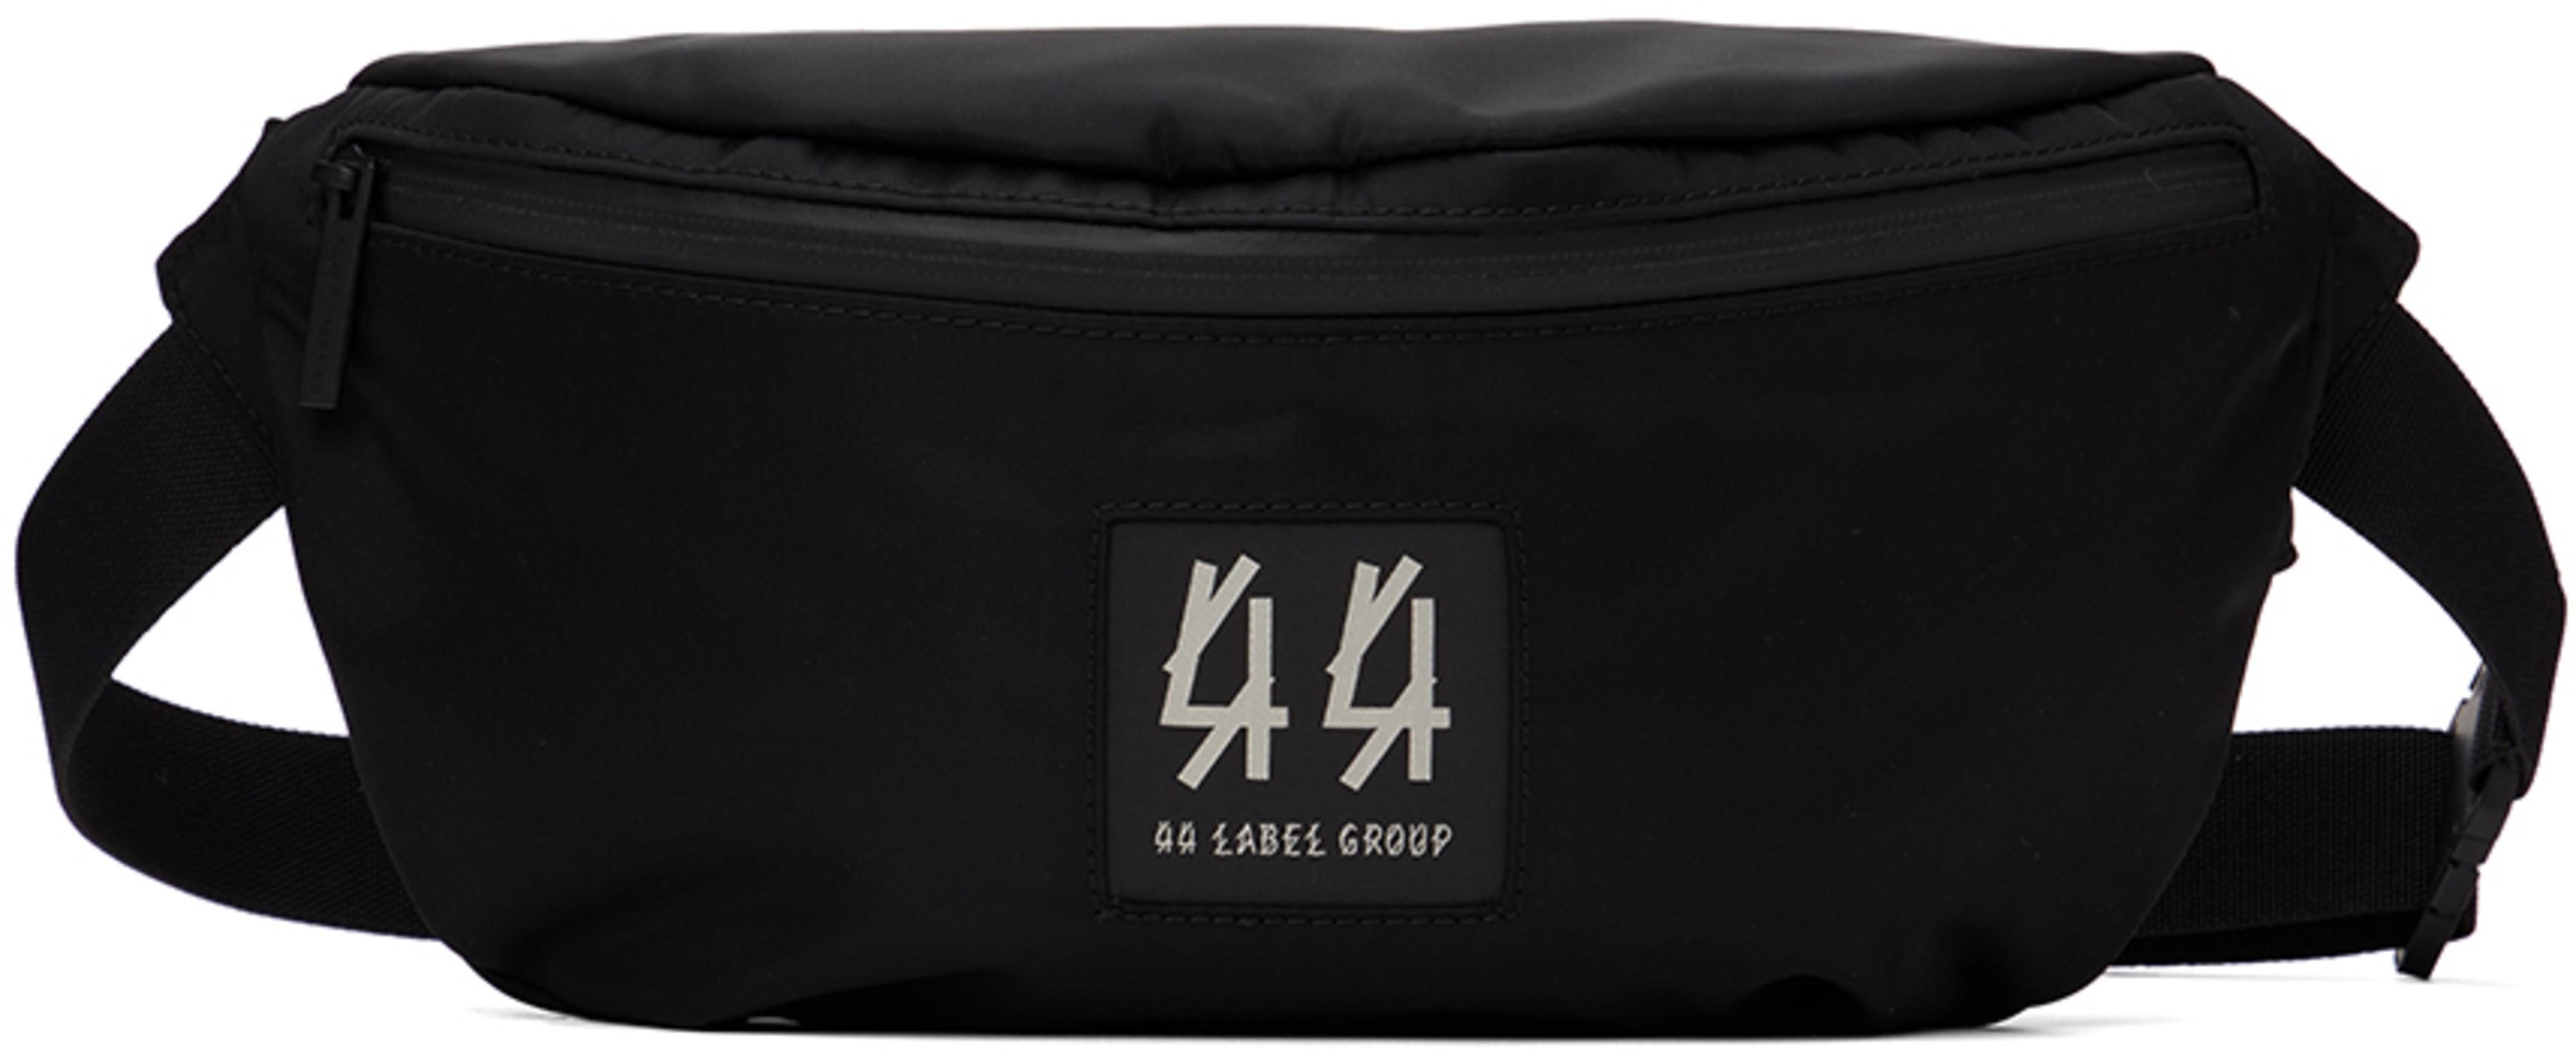 Black Tech Belt Bag by 44 LABEL GROUP